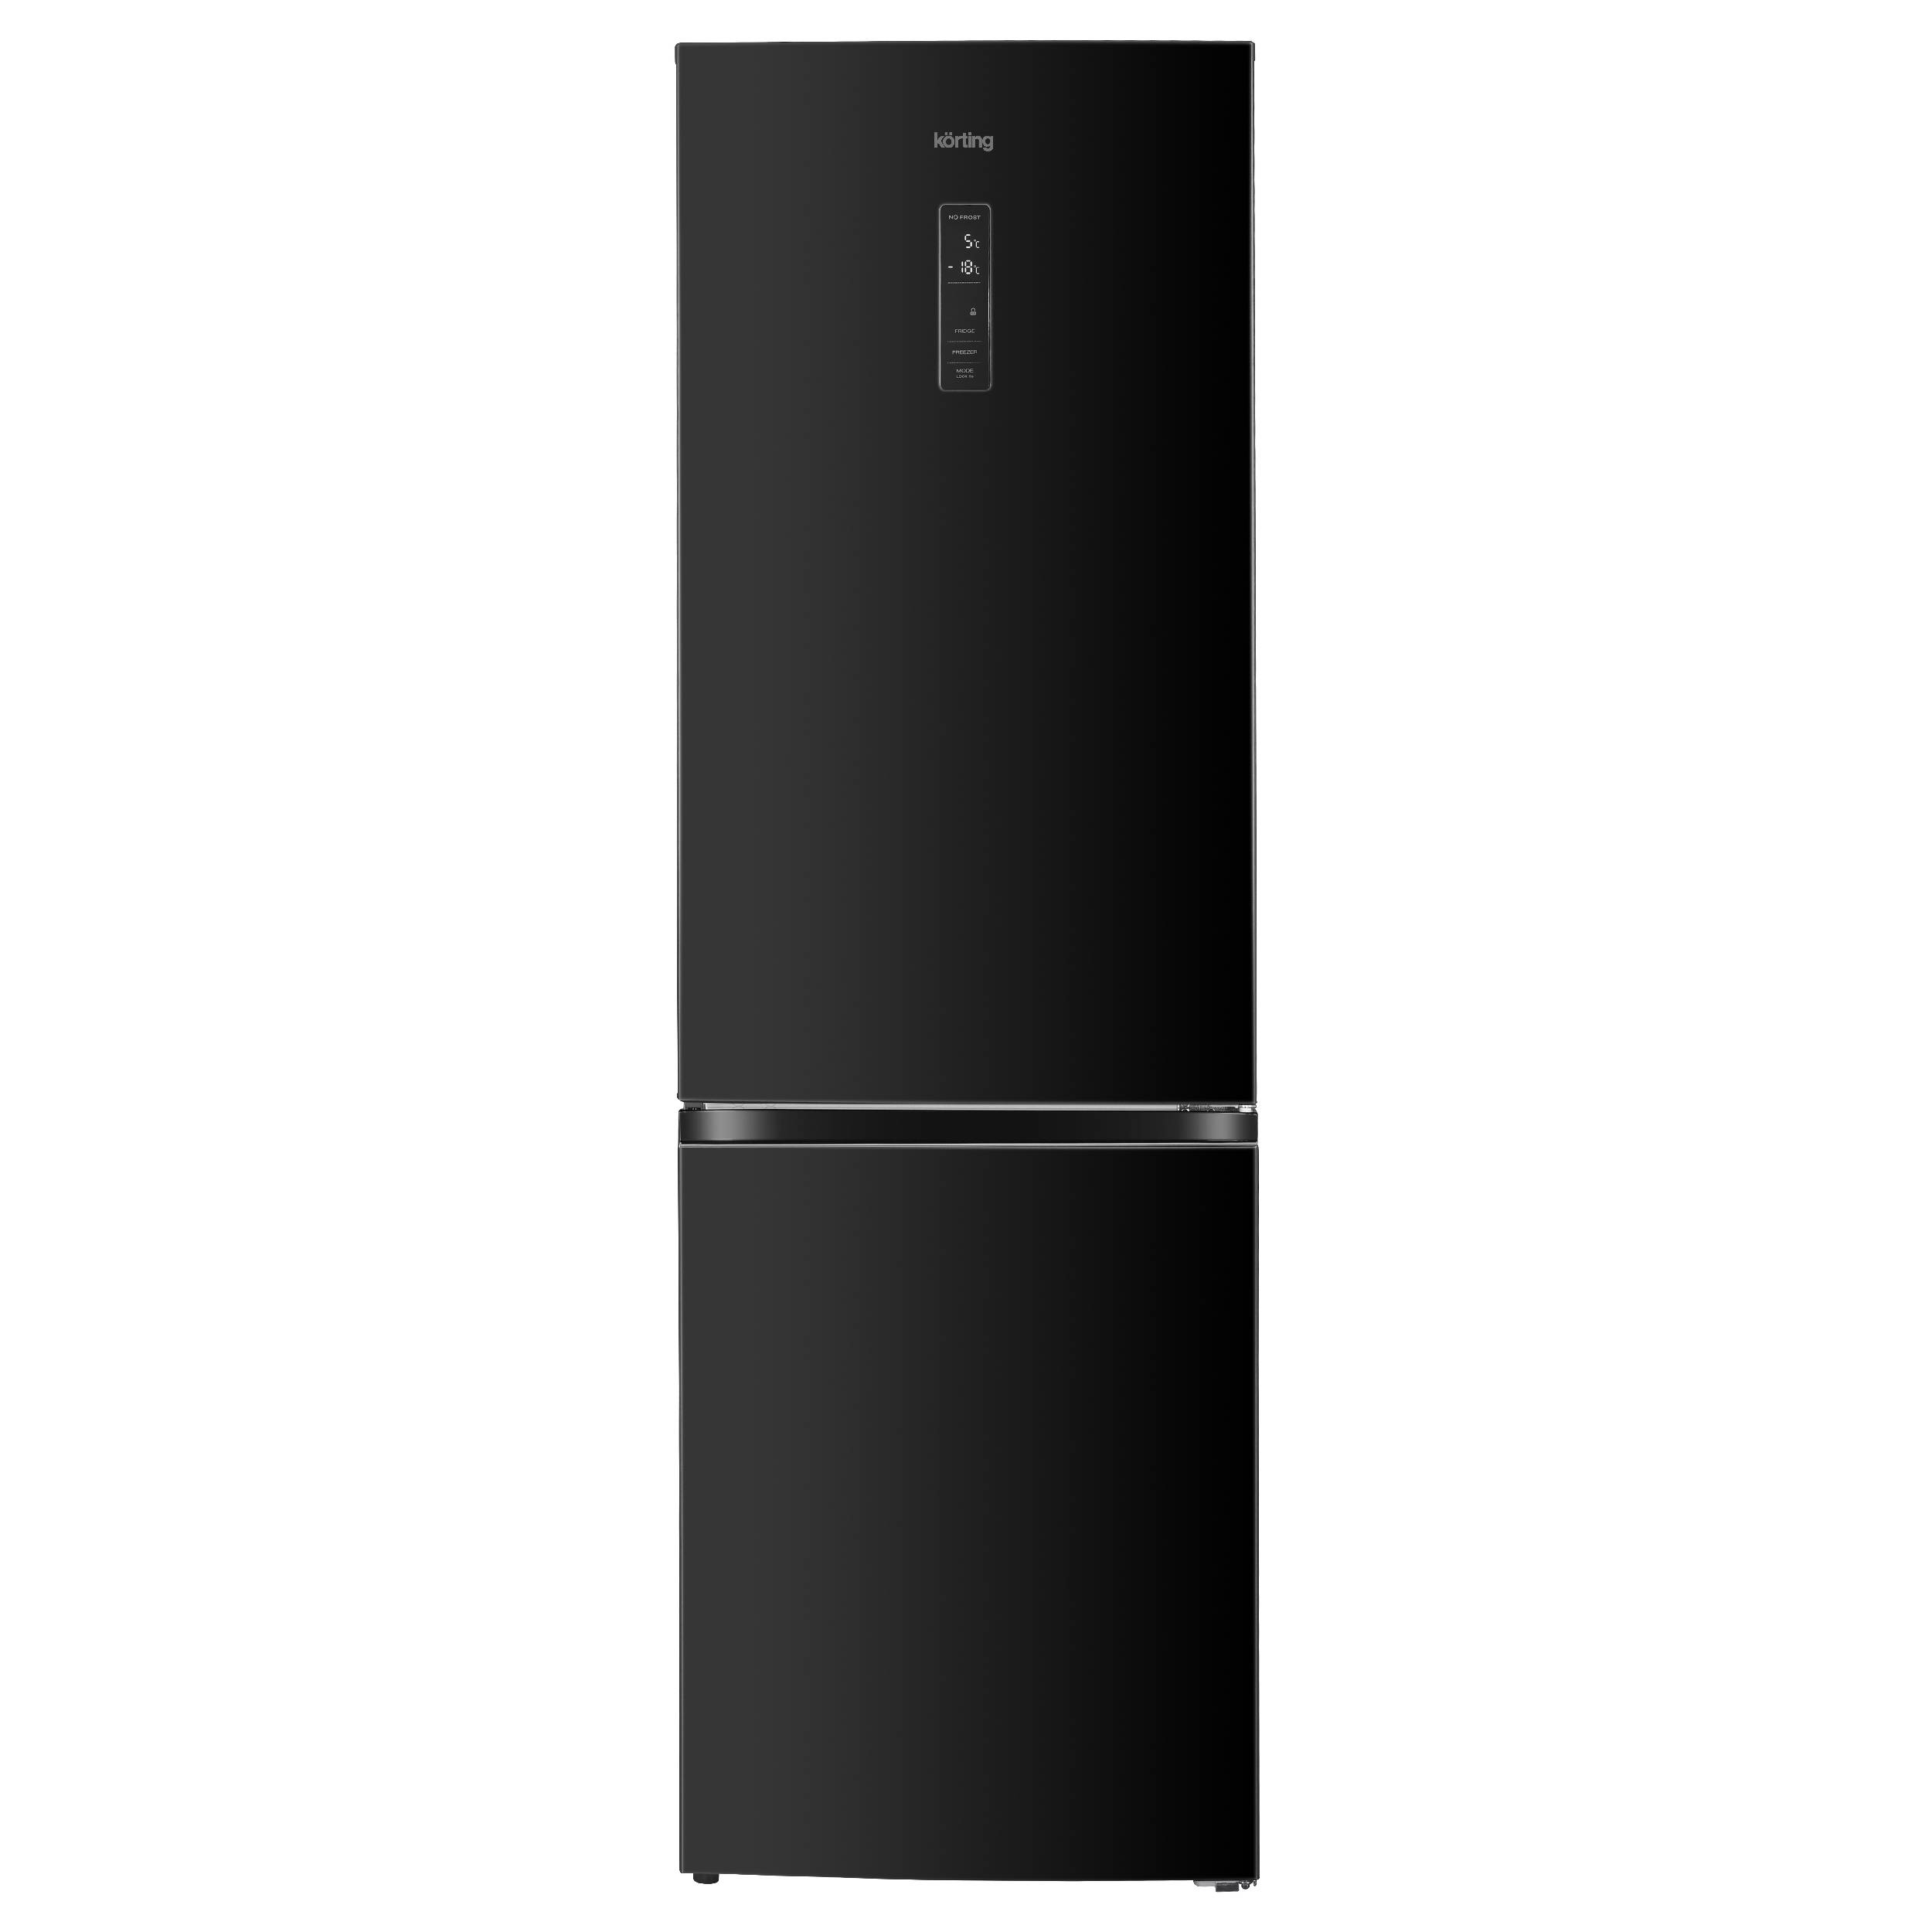 Холодильник Korting KNFC 62980 GN черный холодильник korting knfc 61869 gn